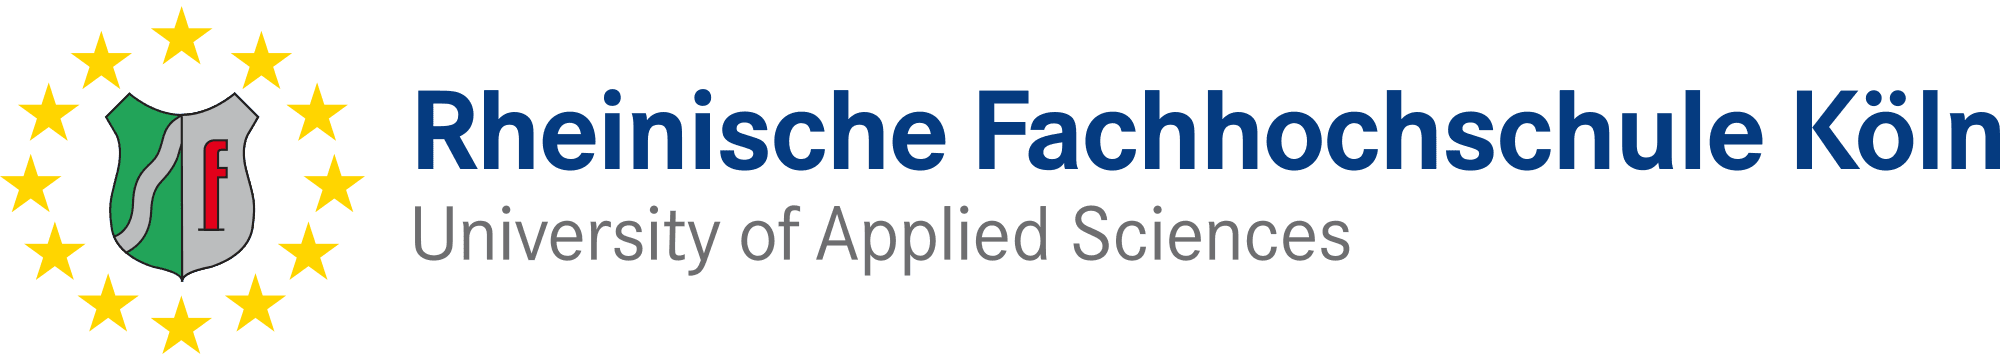 rheinische-fachhochschule-koln-rhf-university-of-applied-sciences-5dbed2d7c3-cover-picture